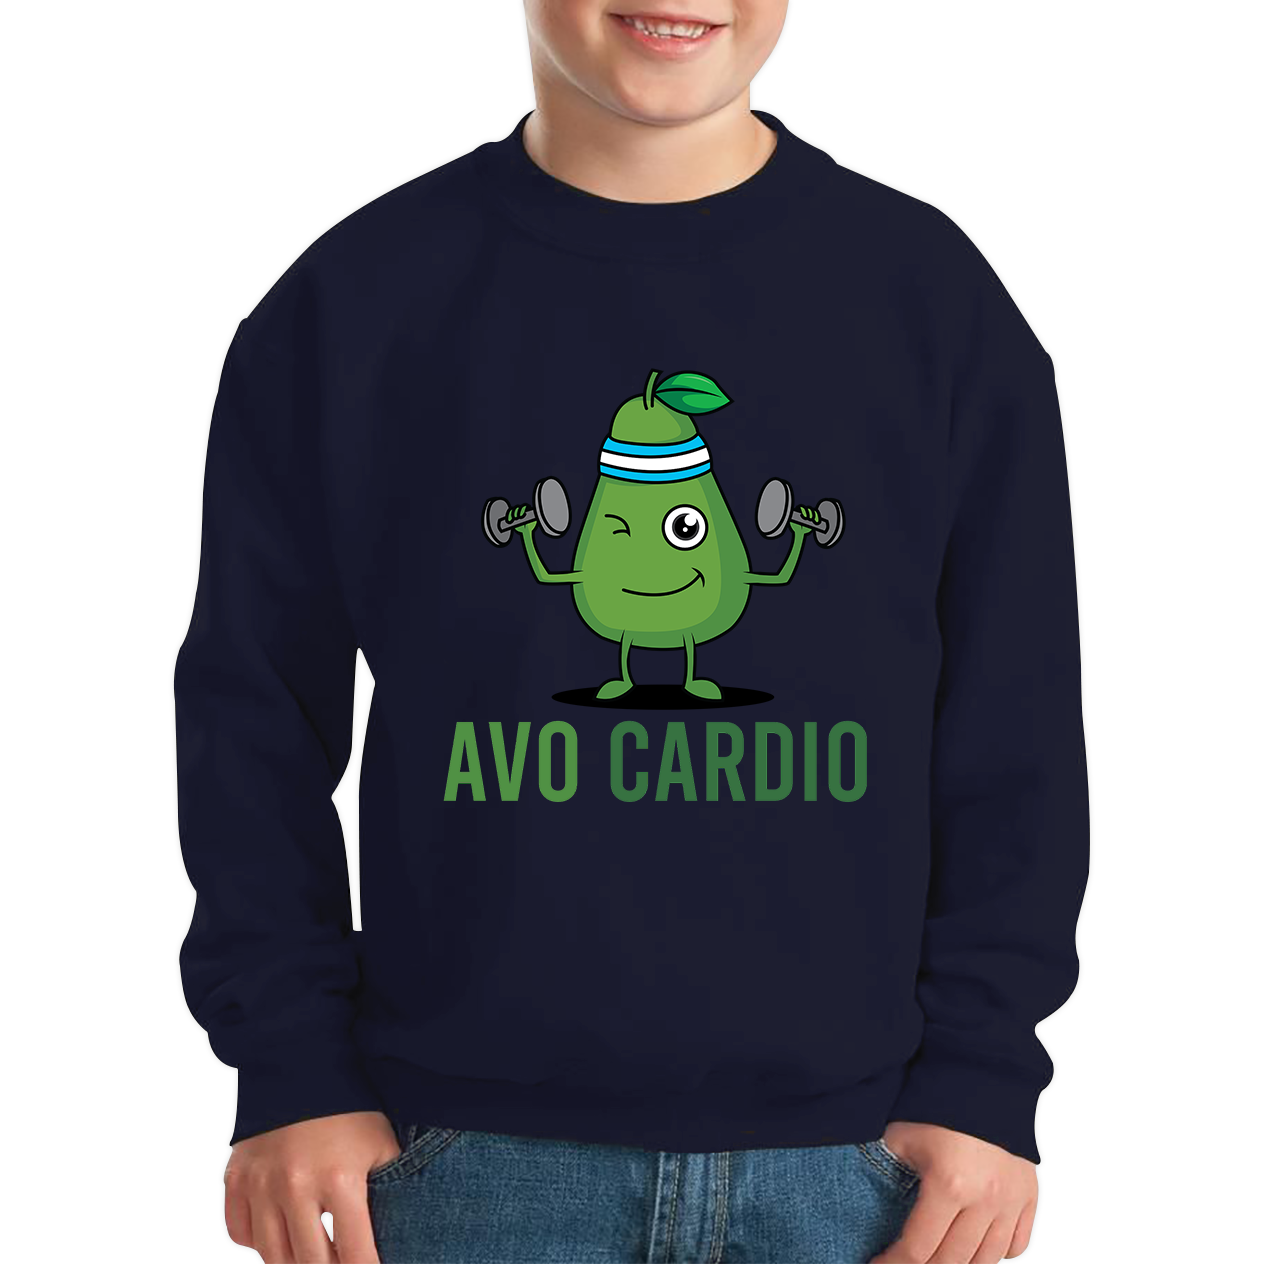 Avo Cardio Funny Avocado Fitness Kids Sweatshirt